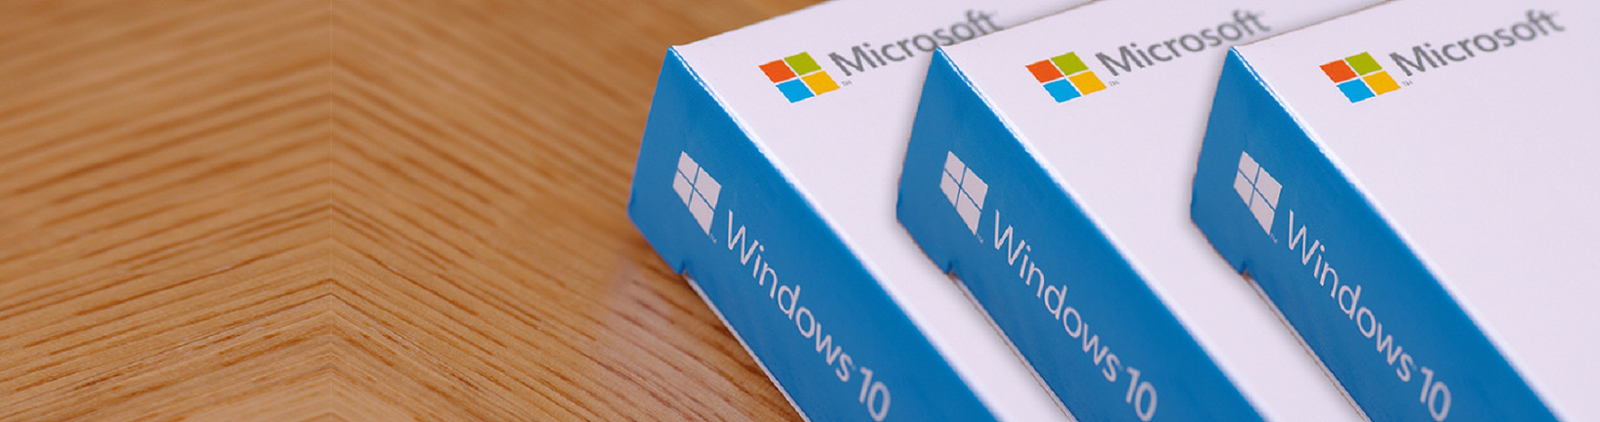 Microsoft Windows 10 επαγγελματίας